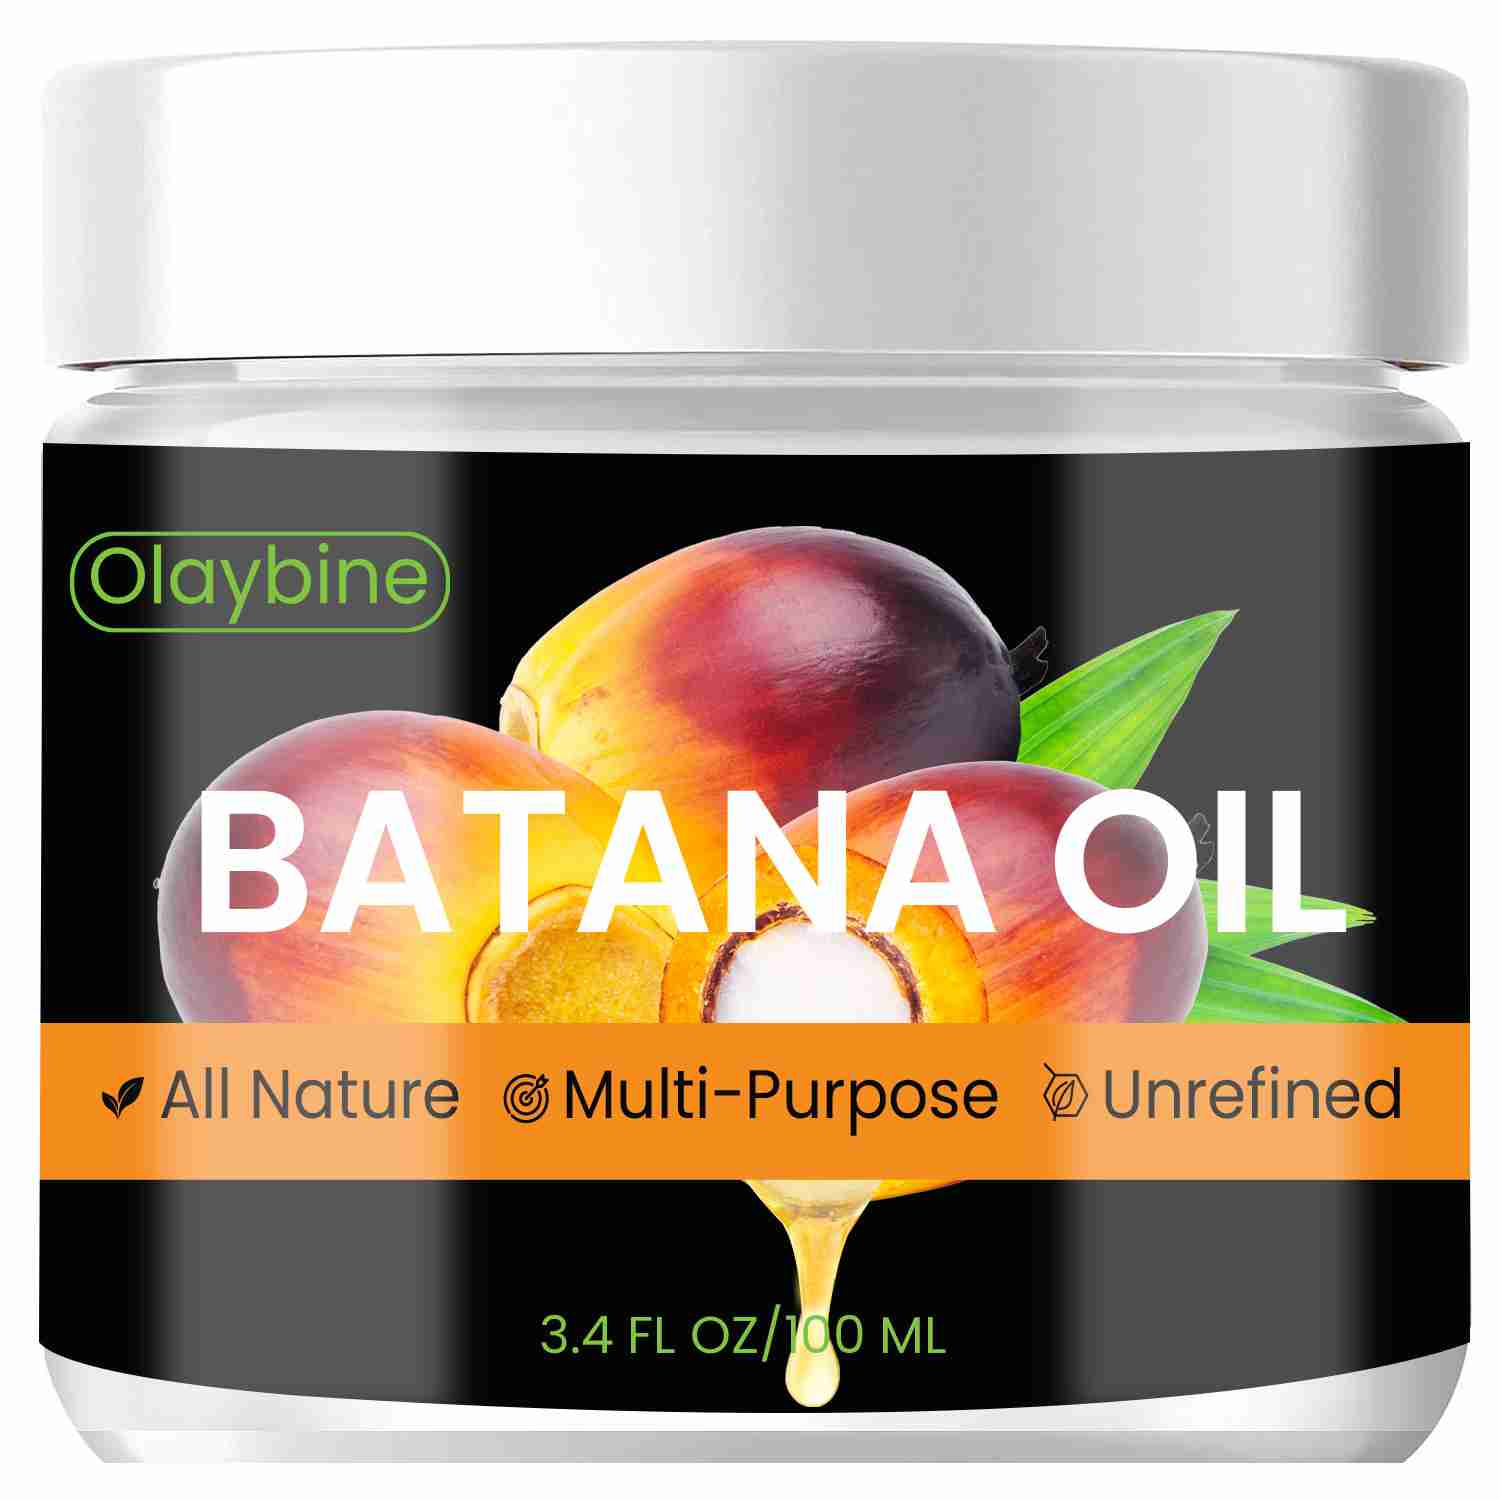 batana-oil-for-hair-growth-dr-sebi-organic with cash back rebate